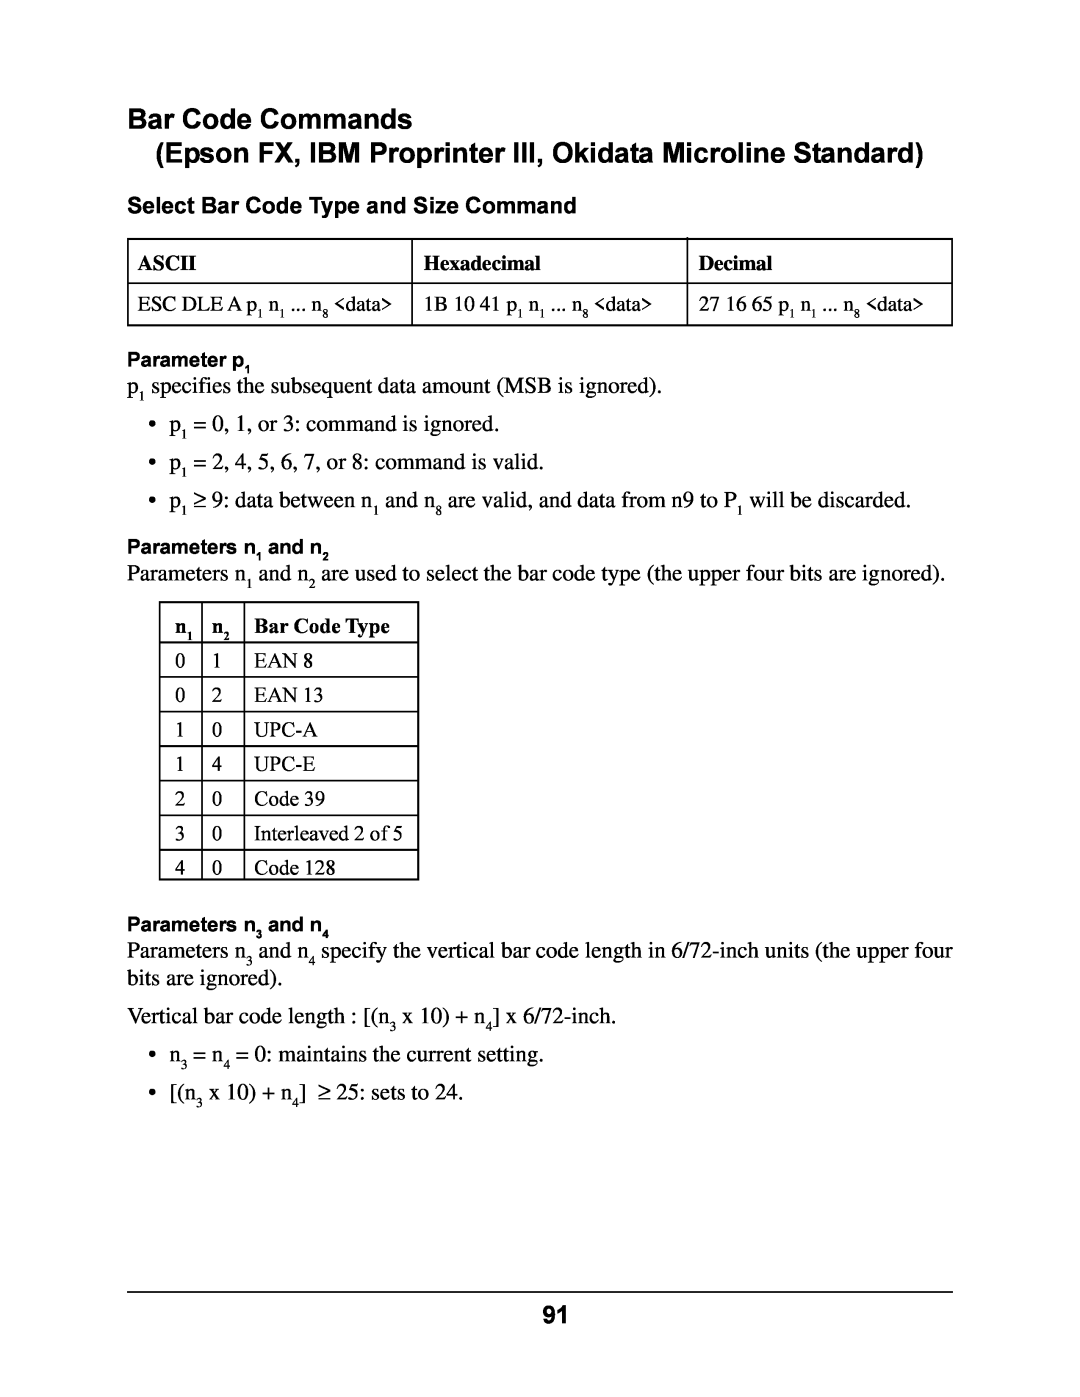 Oki 4410 manual Bar Code Commands, Epson FX, IBM Proprinter III, Okidata Microline Standard 